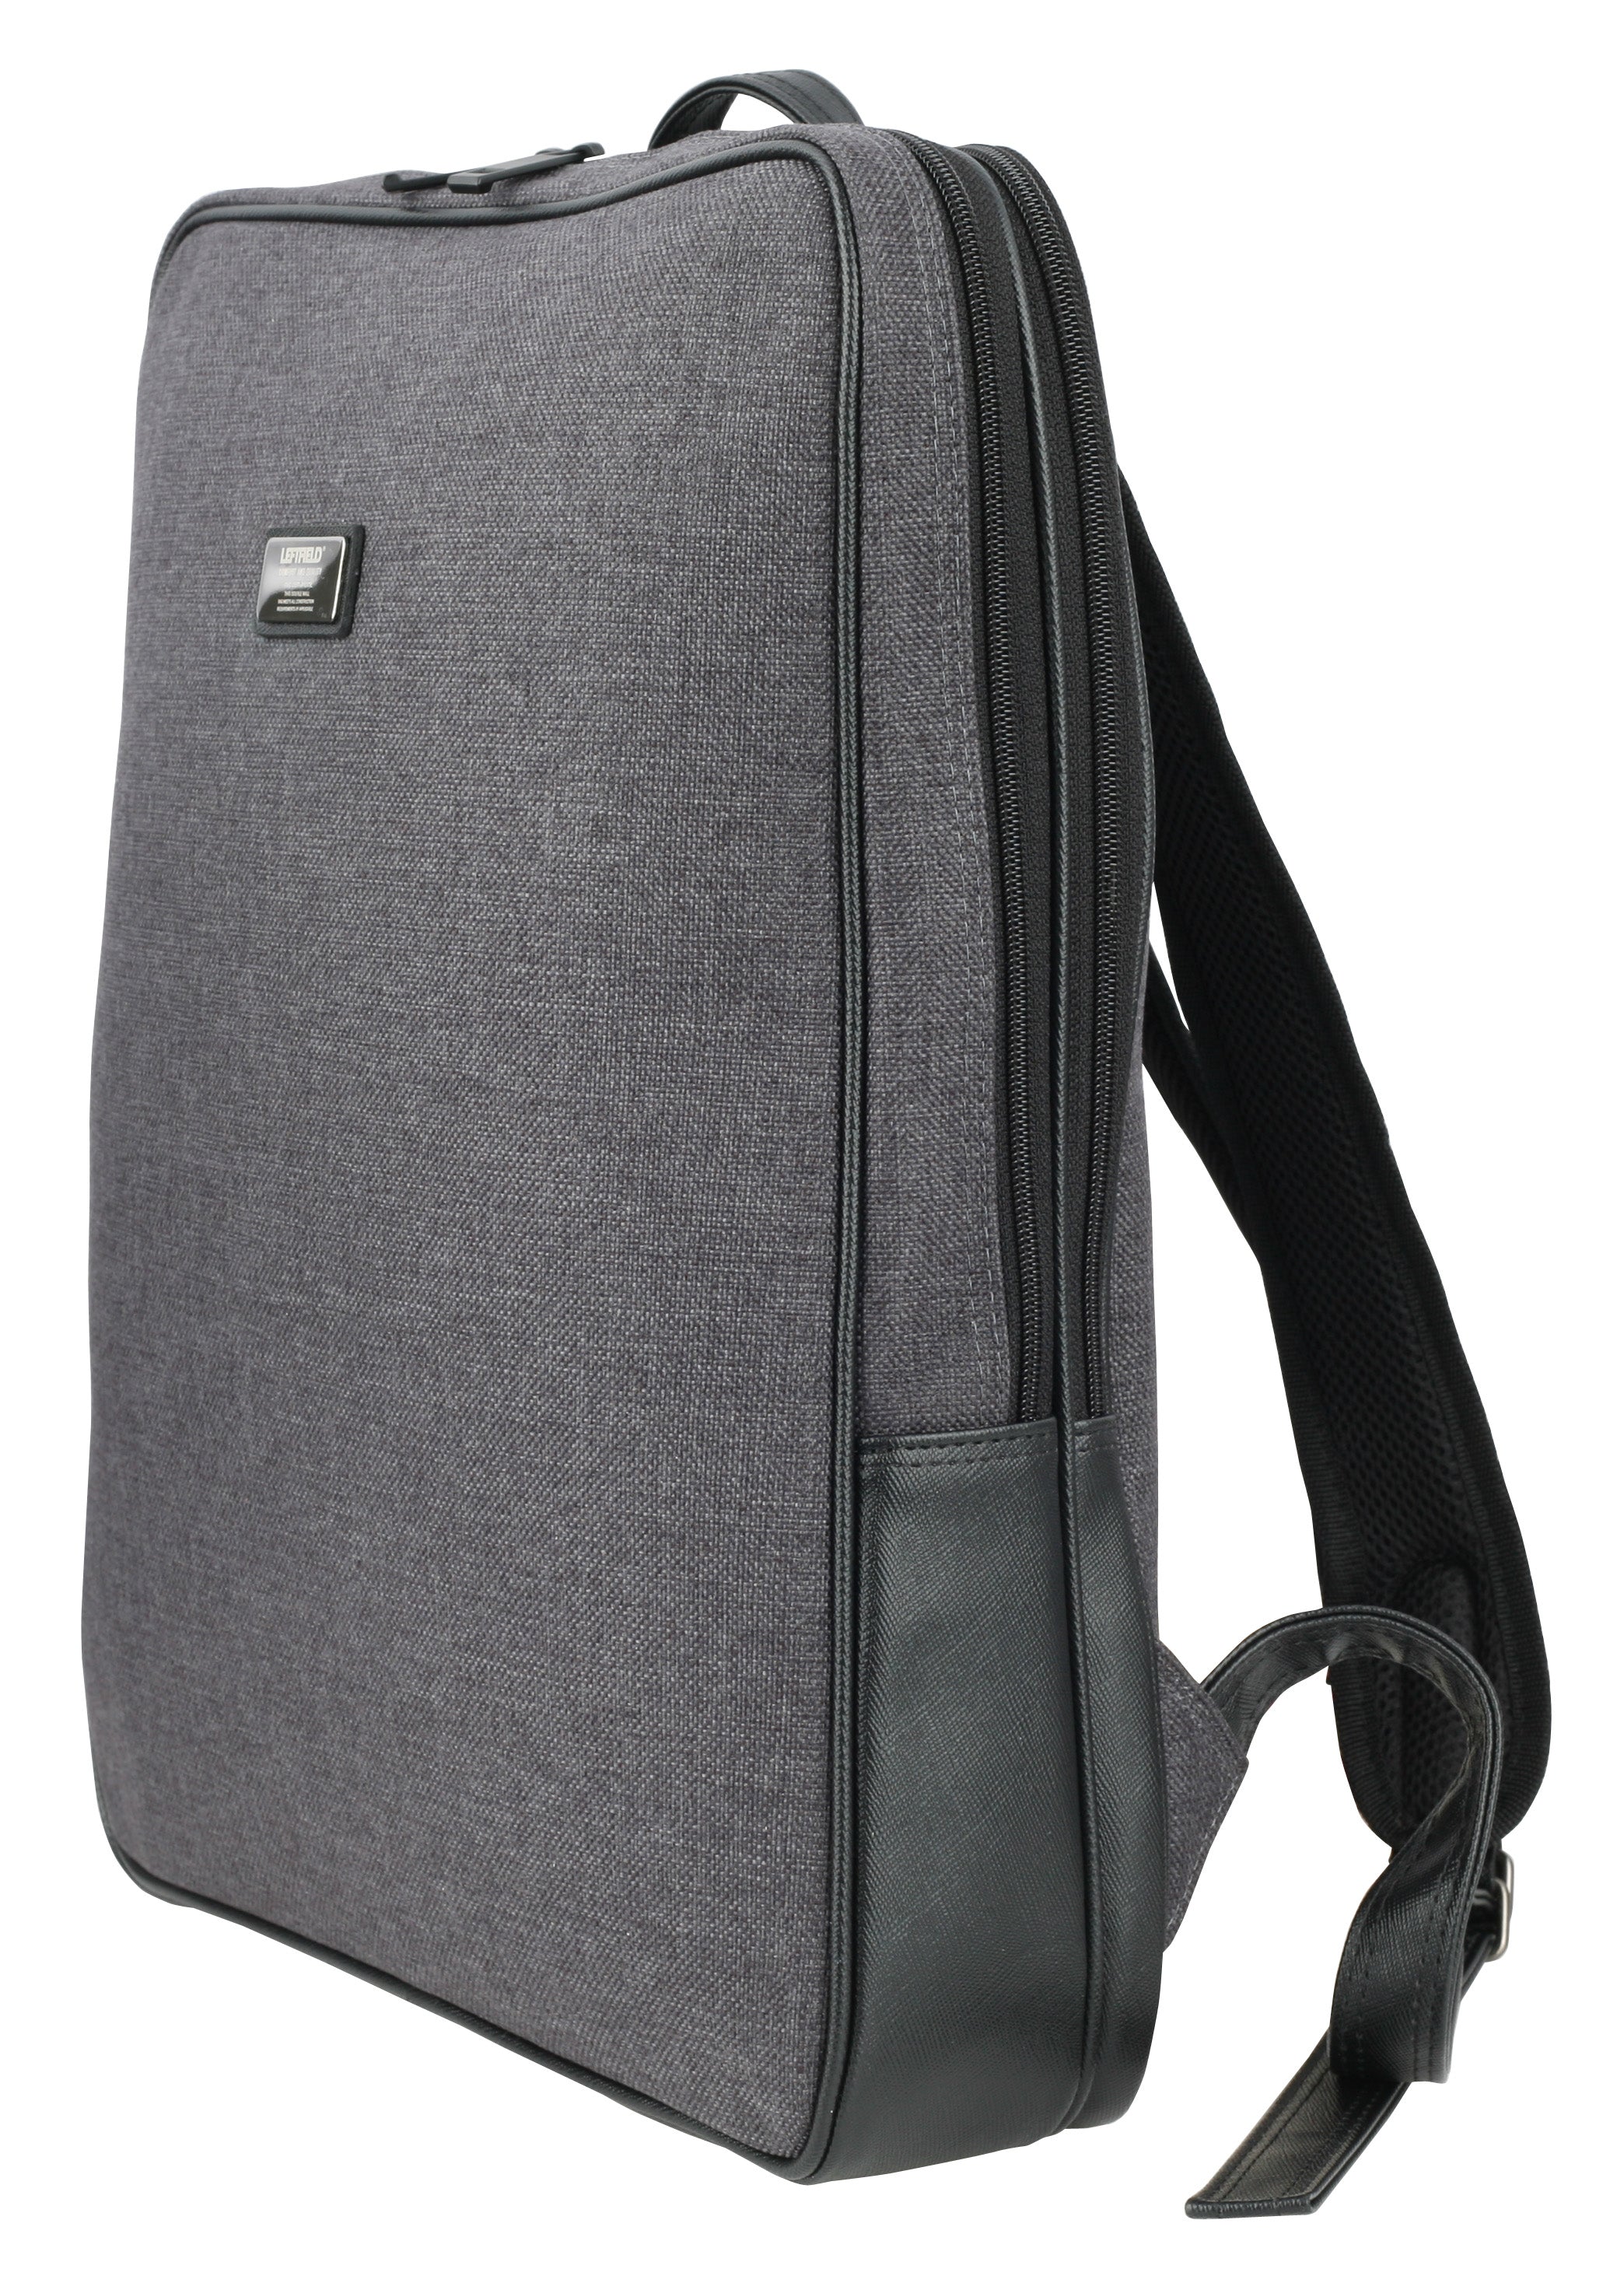 Black Square Canvas Laptop School Book Business Backpacks